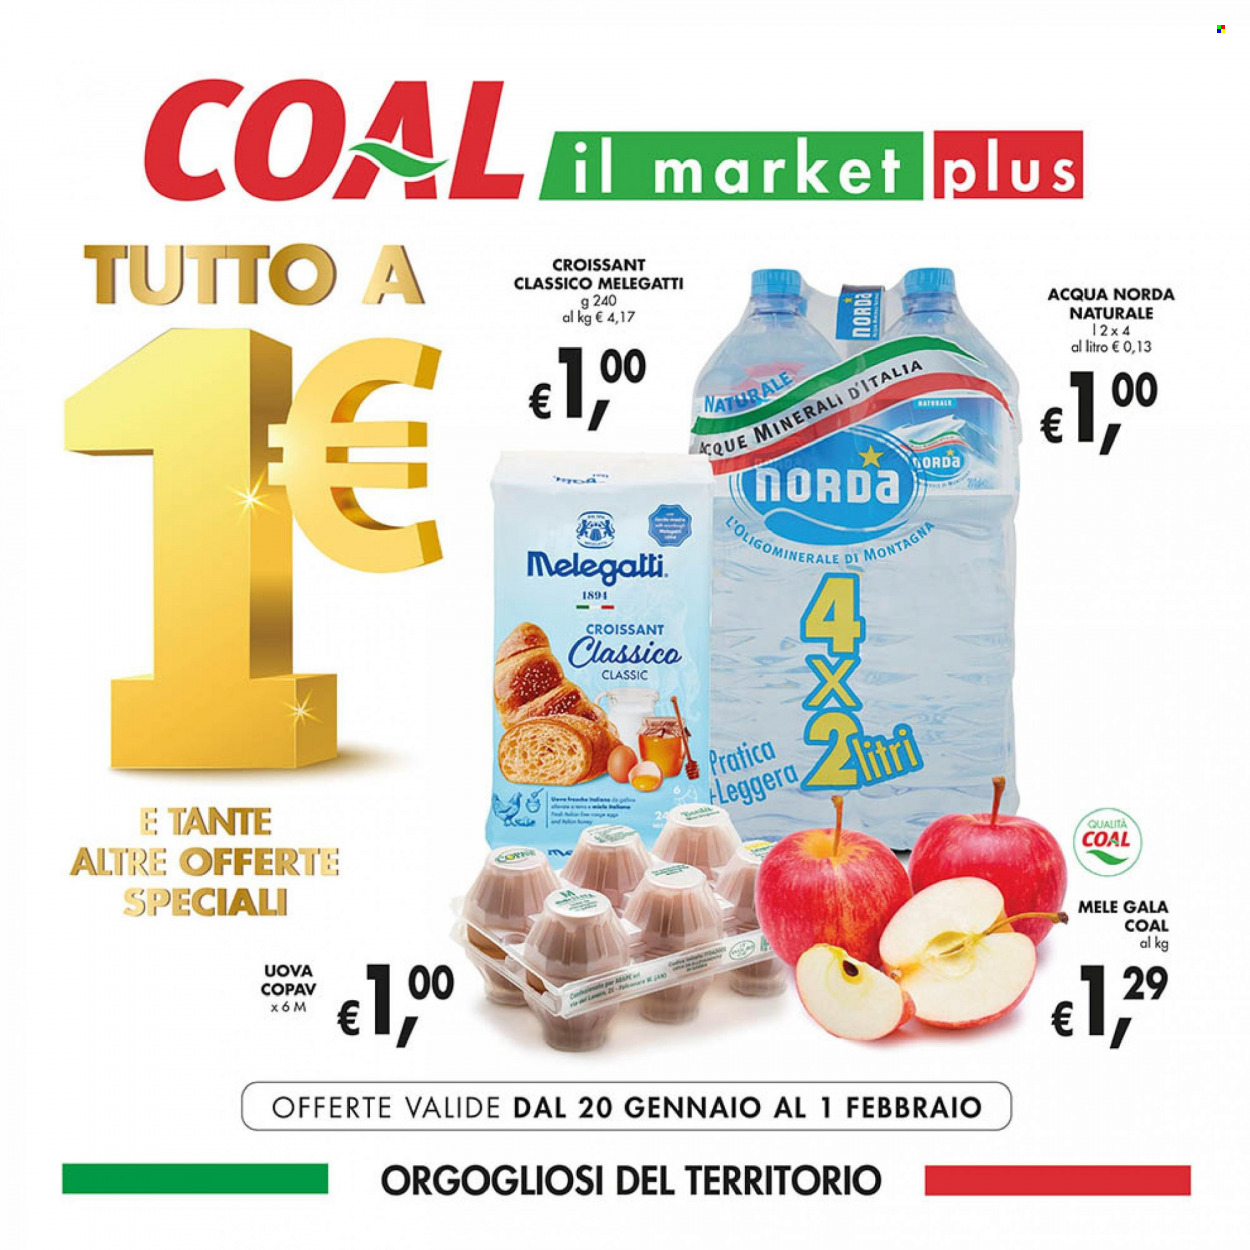 thumbnail - Volantino COAL - 20/1/2023 - 1/2/2023 - Prodotti in offerta - croissant, mele, uova, Norda. Pagina 1.